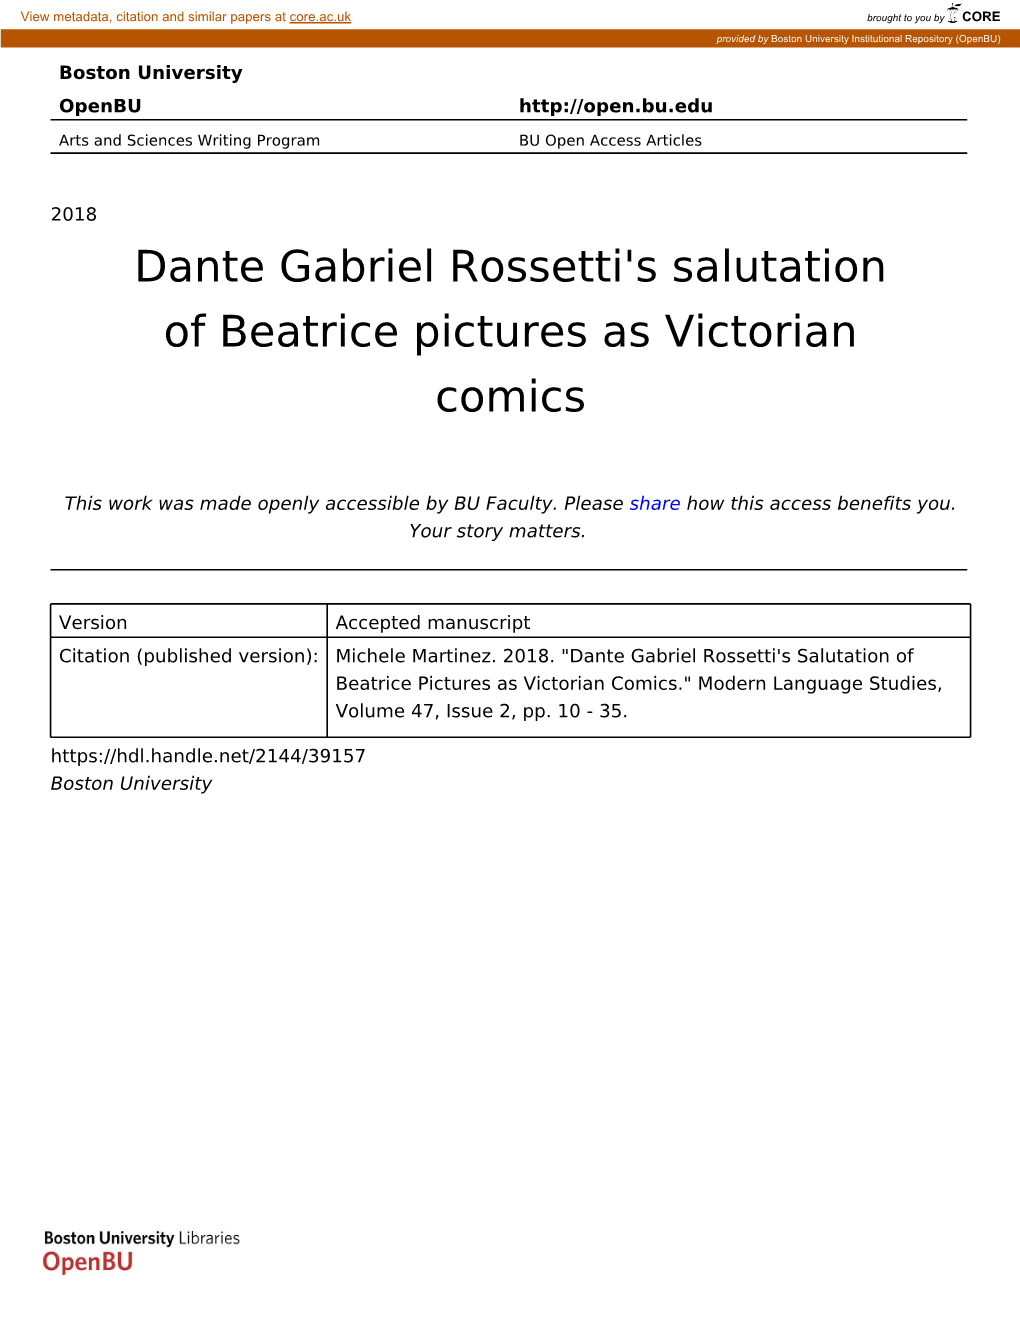 Dante Gabriel Rossetti's Salutation of Beatrice Pictures As Victorian Comics